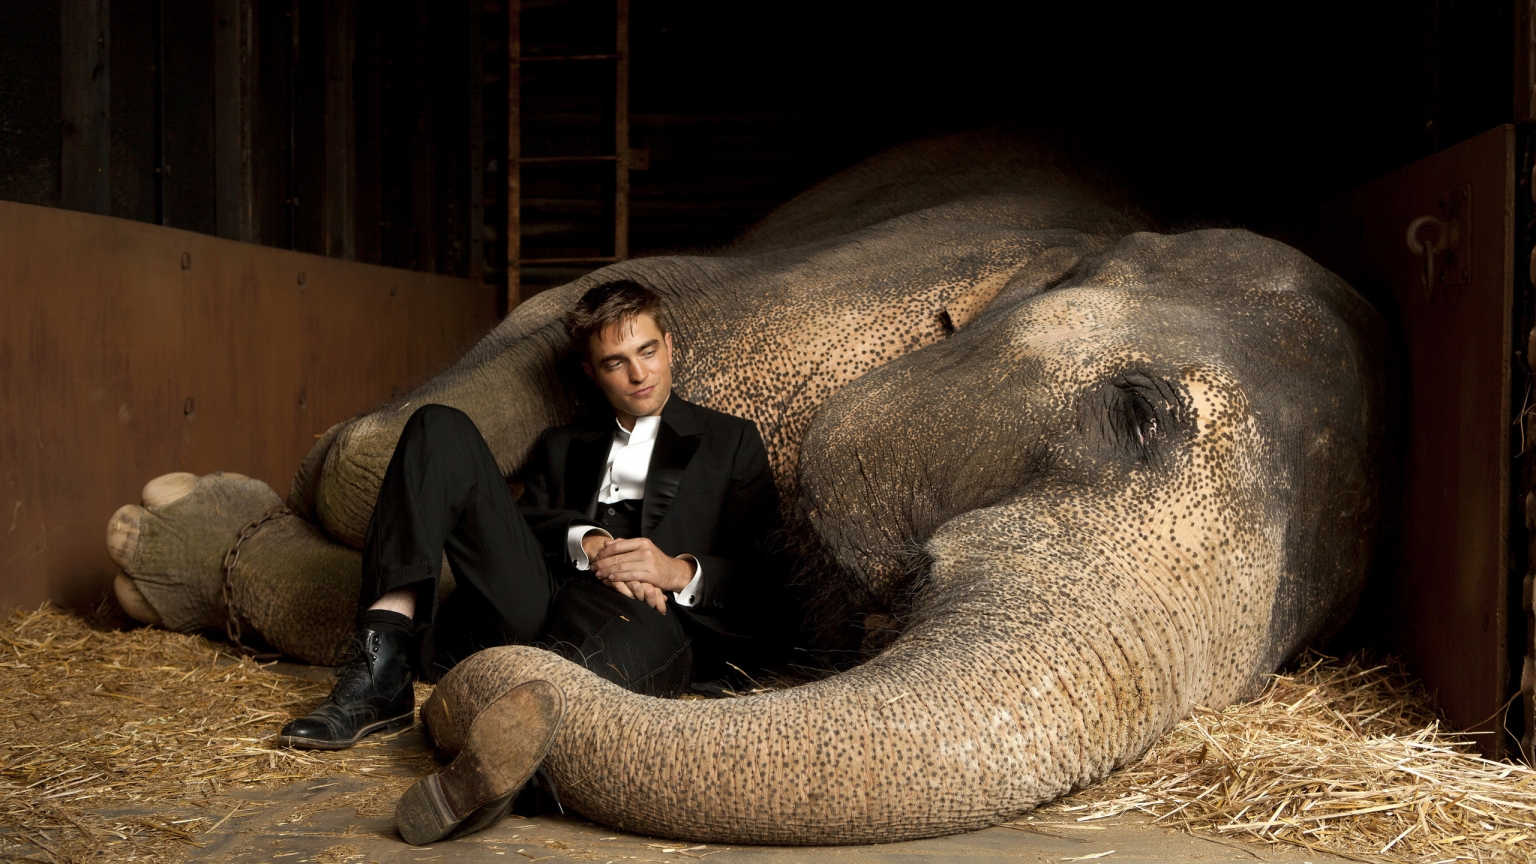 Robert Pattinson Close to Elephant for 1536 x 864 HDTV resolution